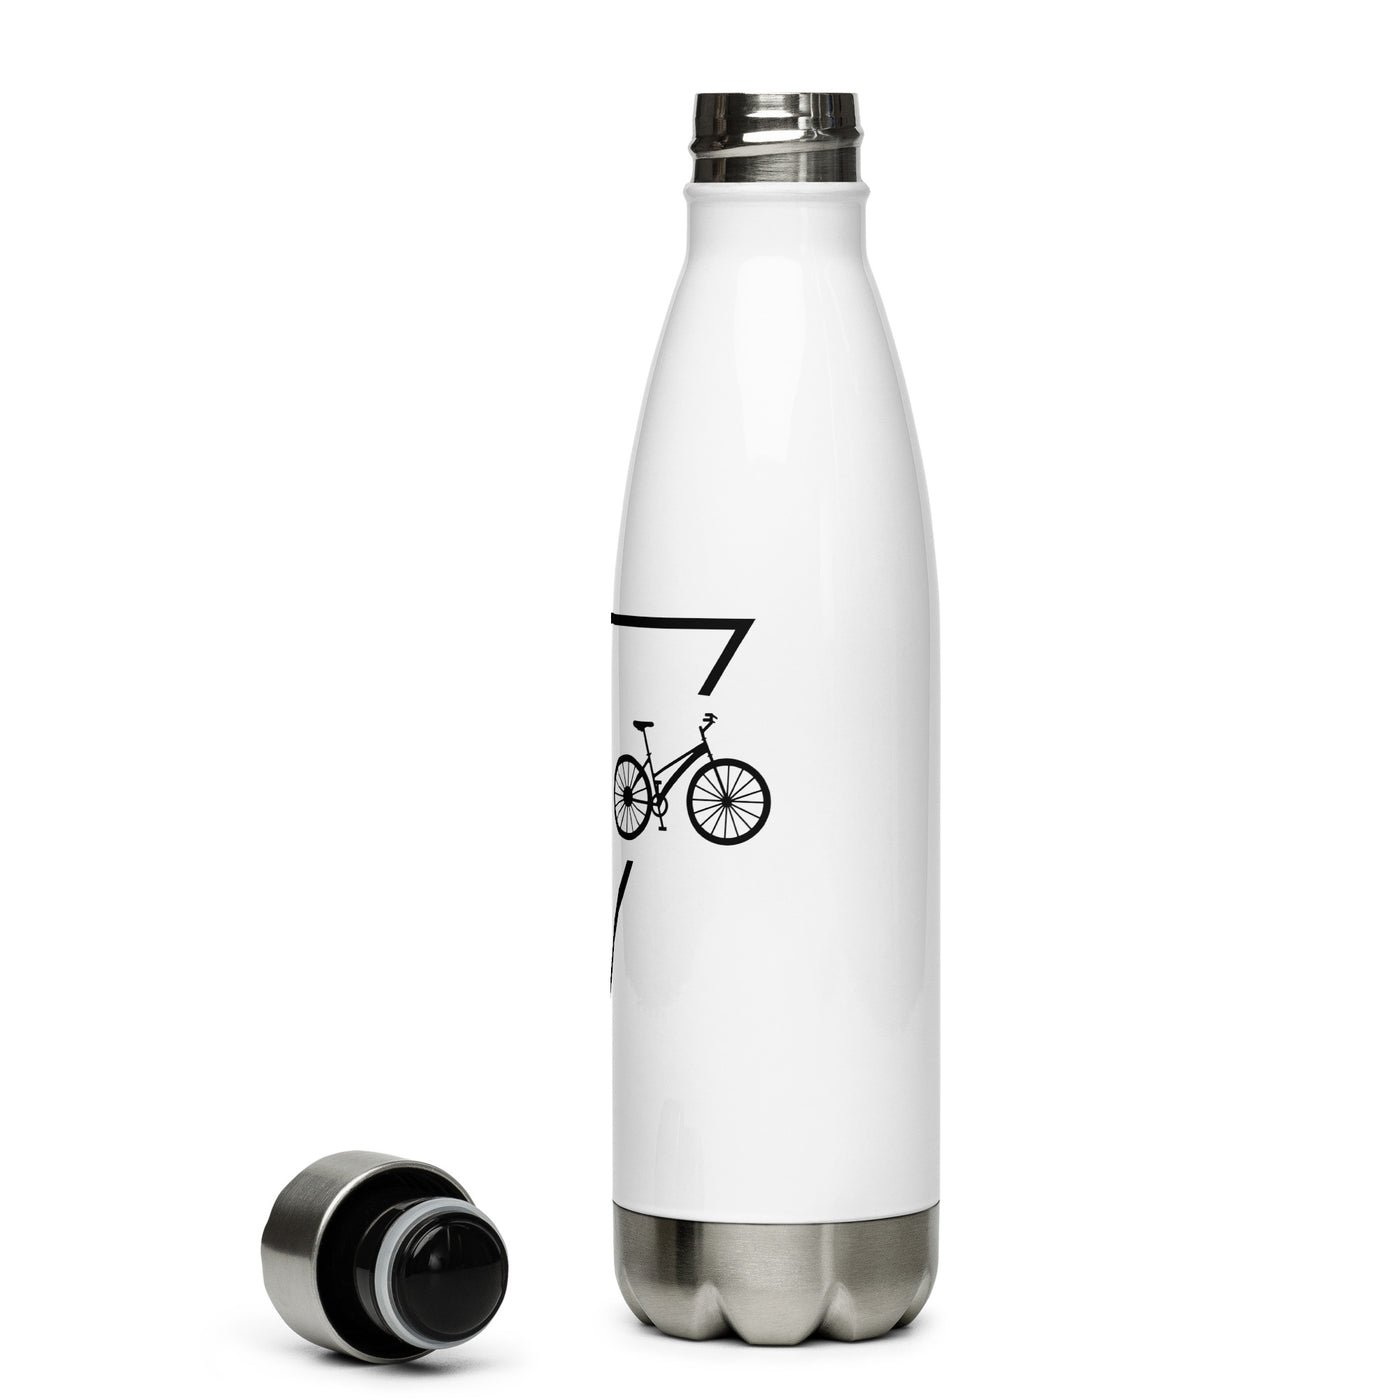 Dreieck 1 Und Fahrrad - Edelstahl Trinkflasche fahrrad